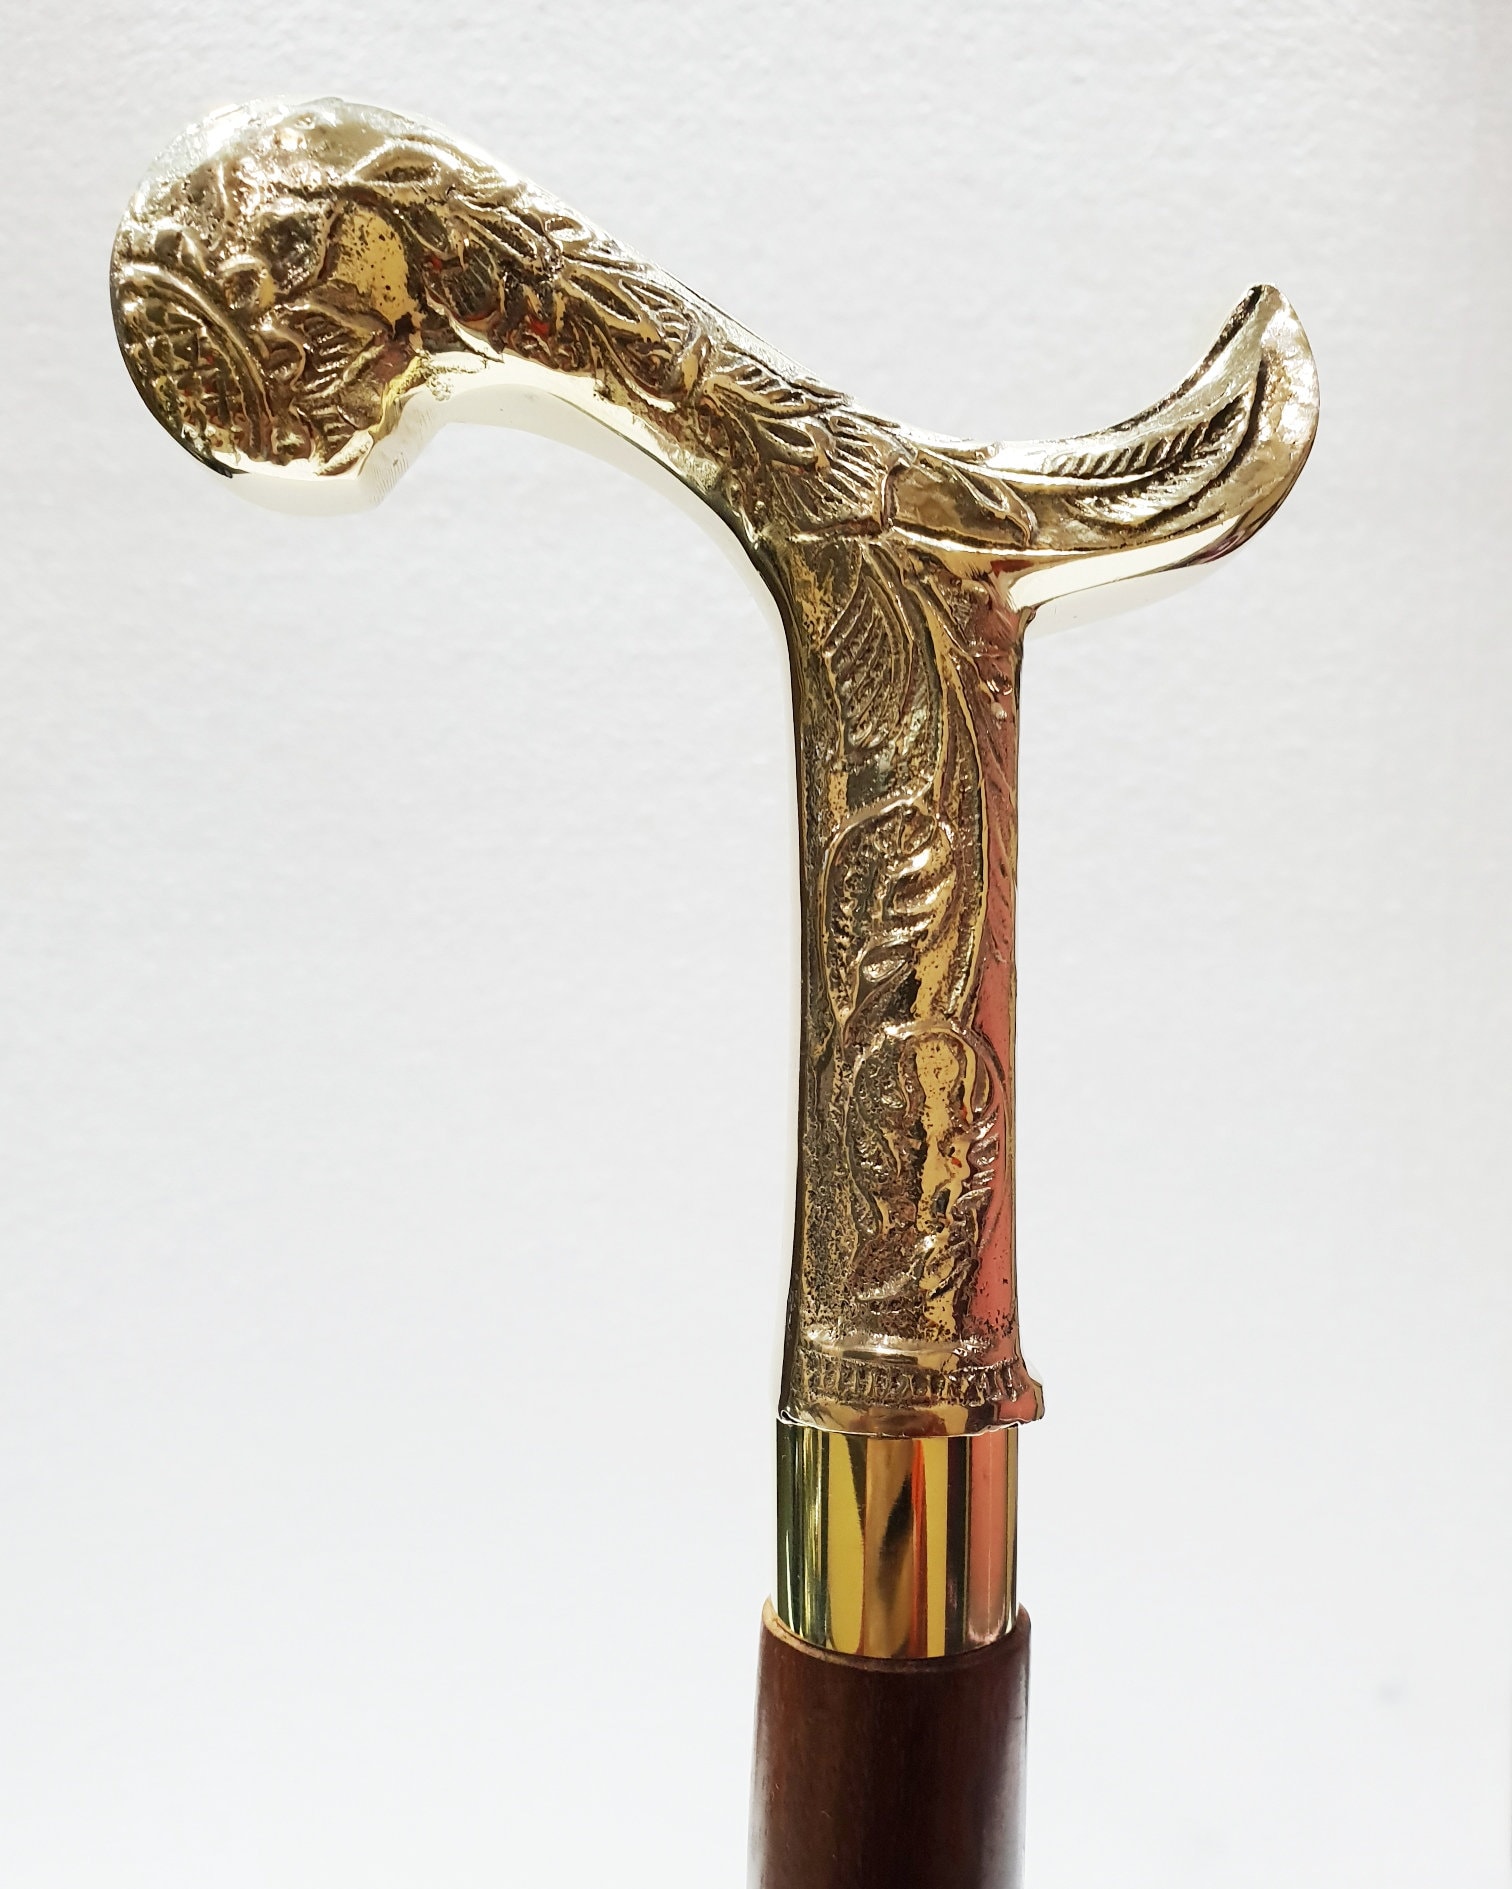 Men's Antique Style Brass Handle Walking Stick Wooden Designer Vintage Cane Gift